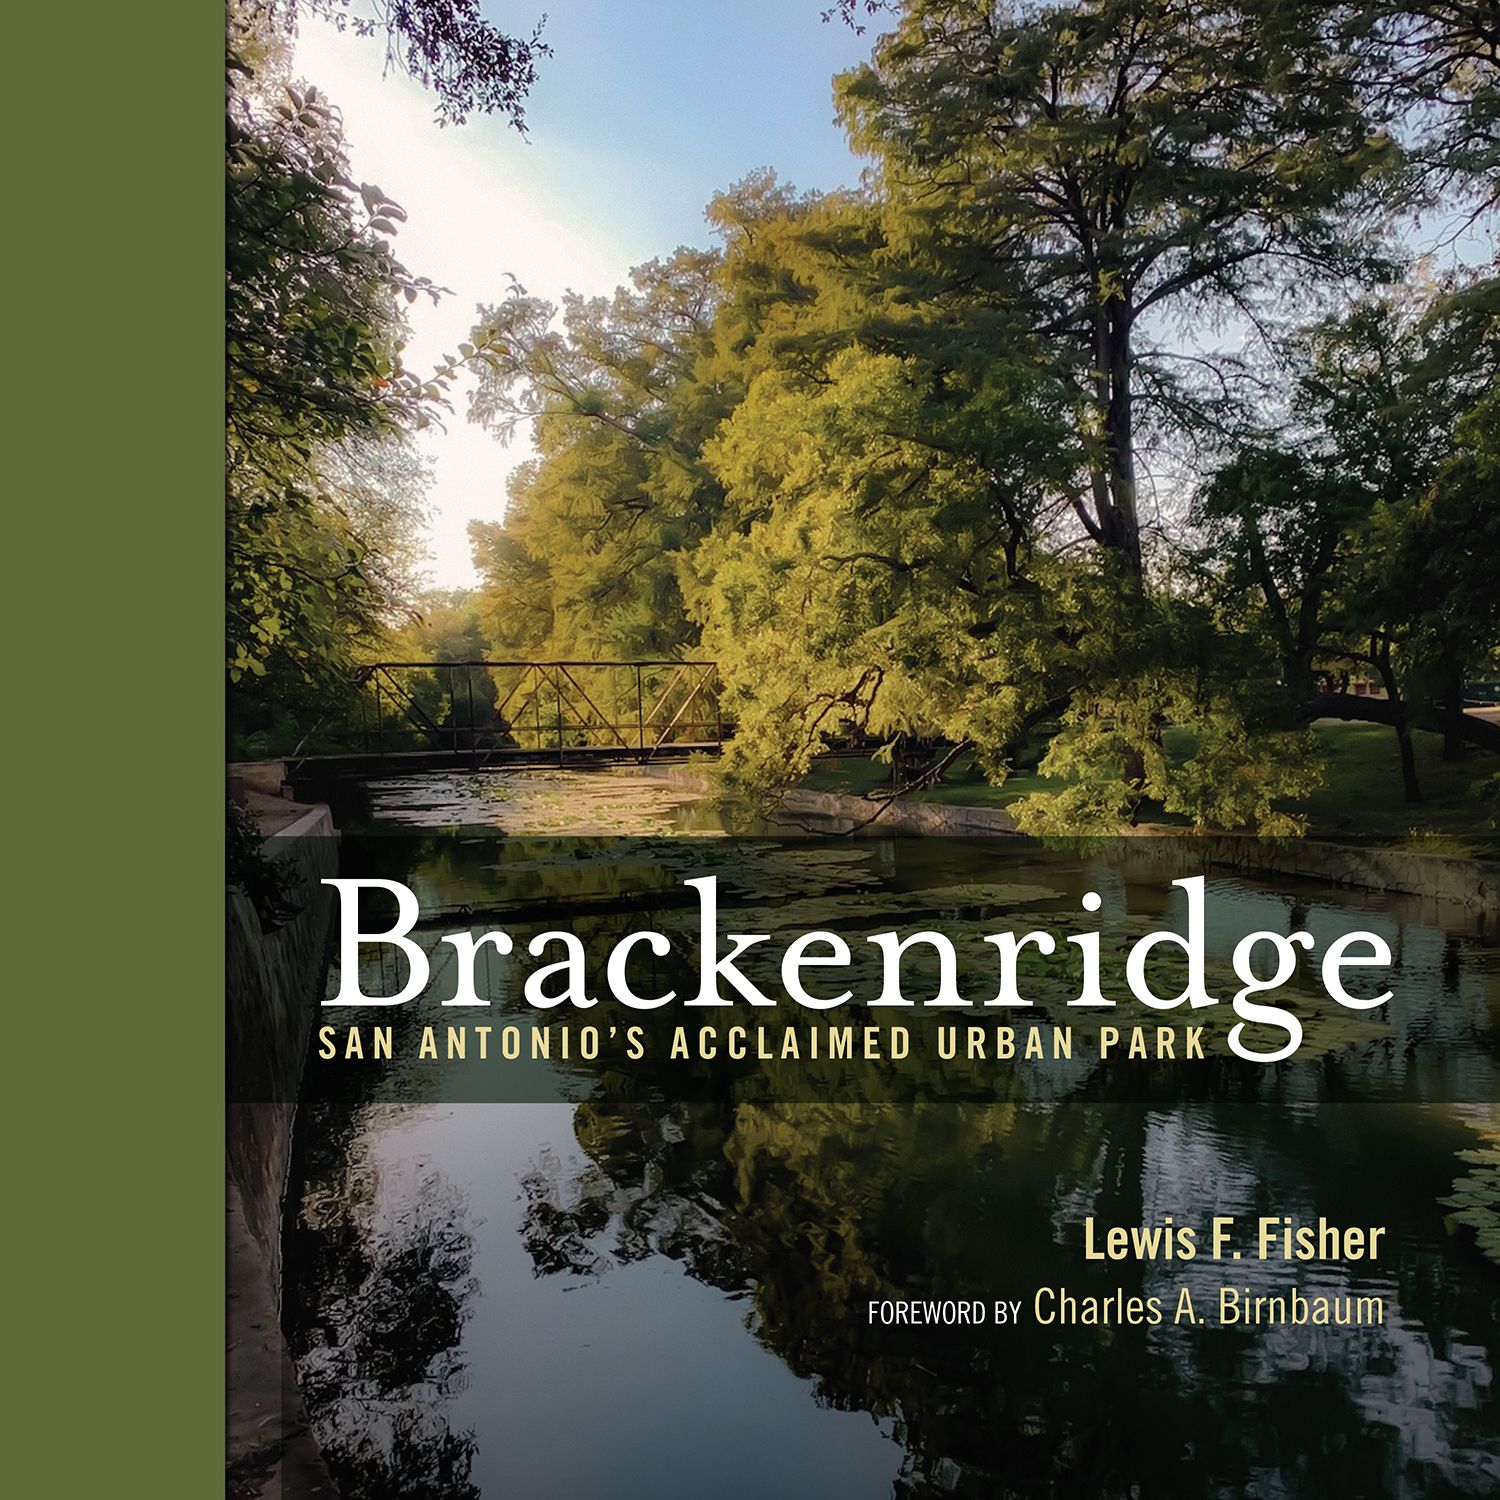 "Brackenridge" Book On Sale Now